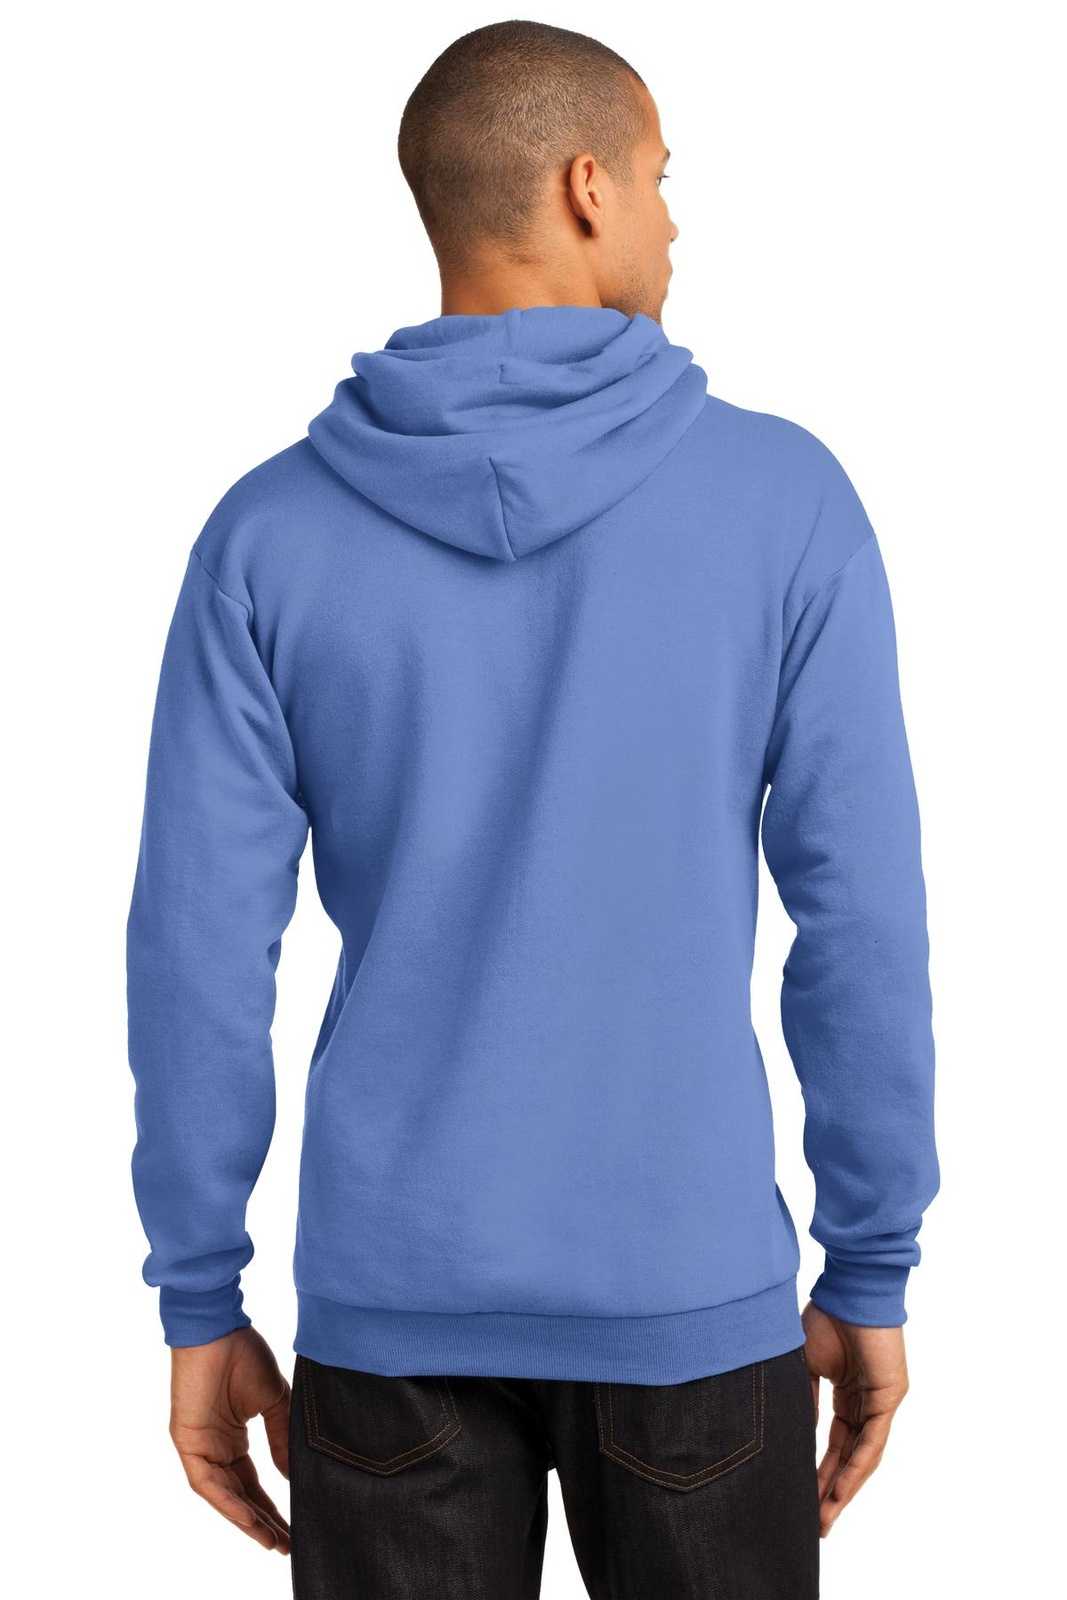 Port & Company PC78H Core Fleece Pullover Hooded Sweatshirt - Carolina Blue - HIT a Double - 1